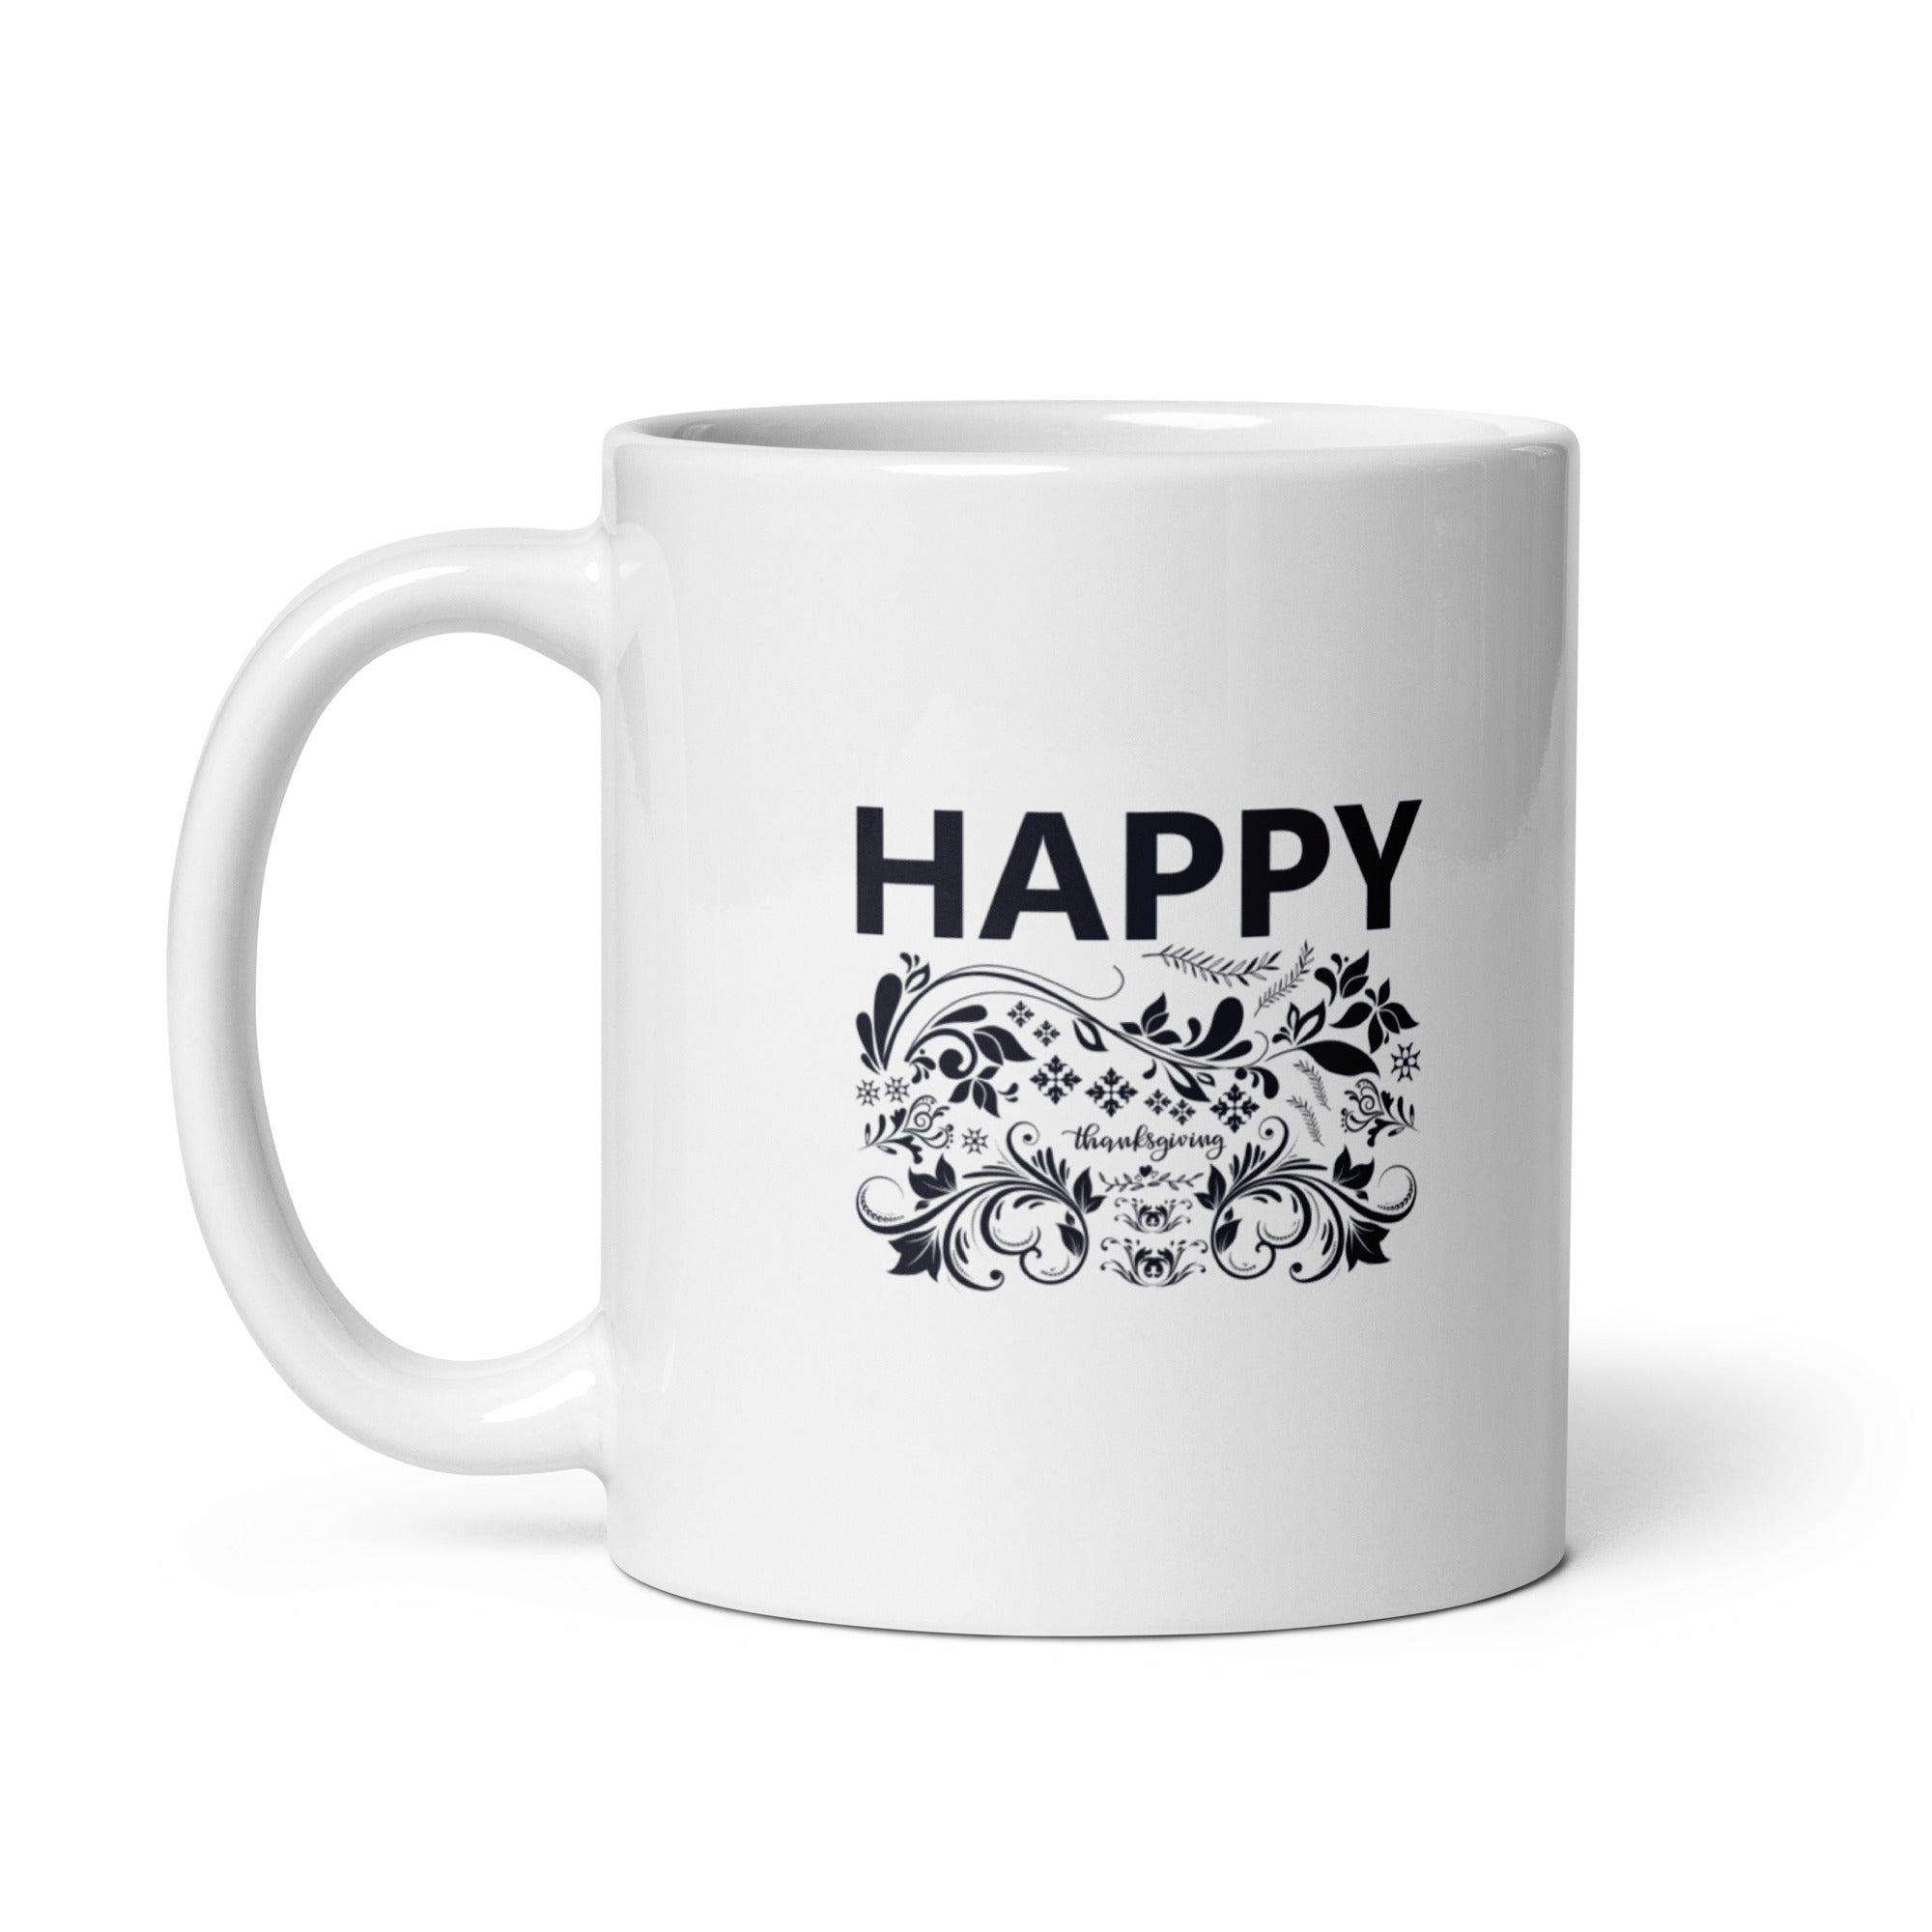 Happy Thanksgiving - White glossy mug